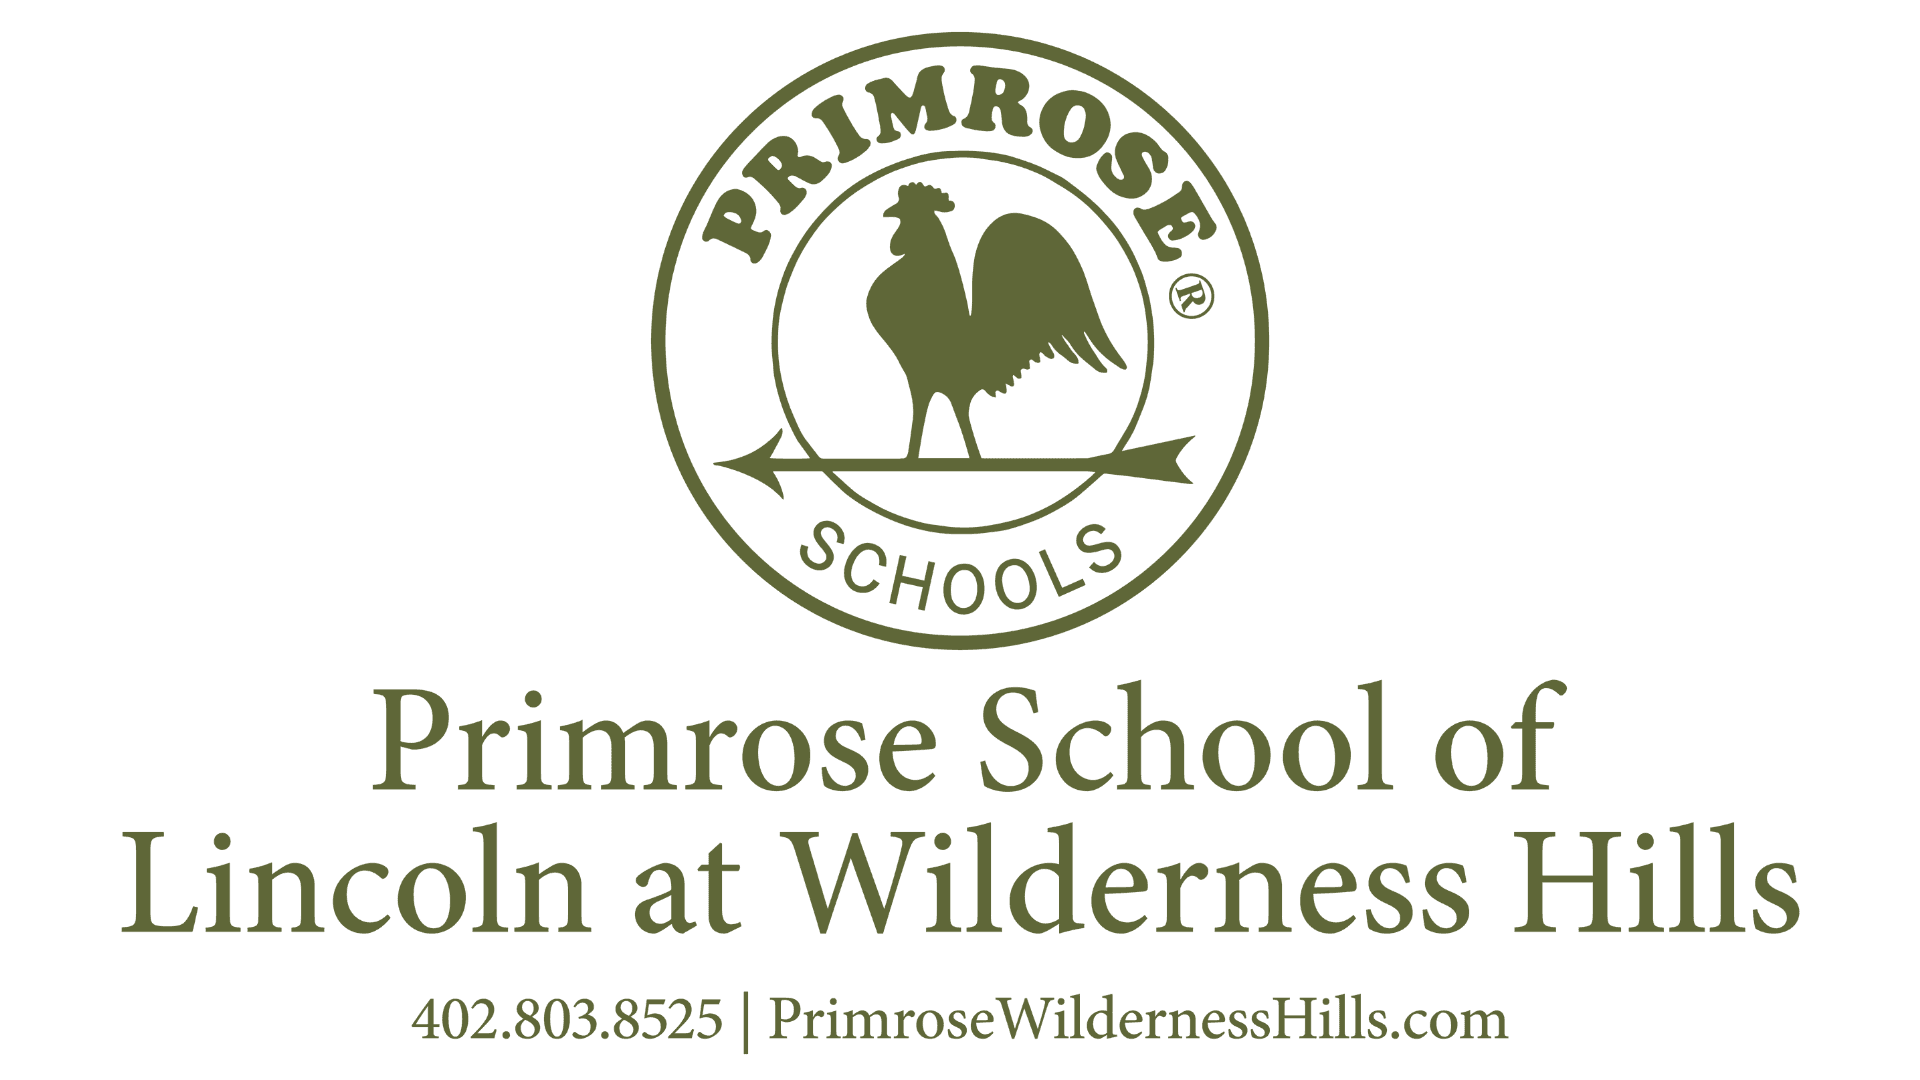 Primrose School of Lincoln at Wilderness Hills